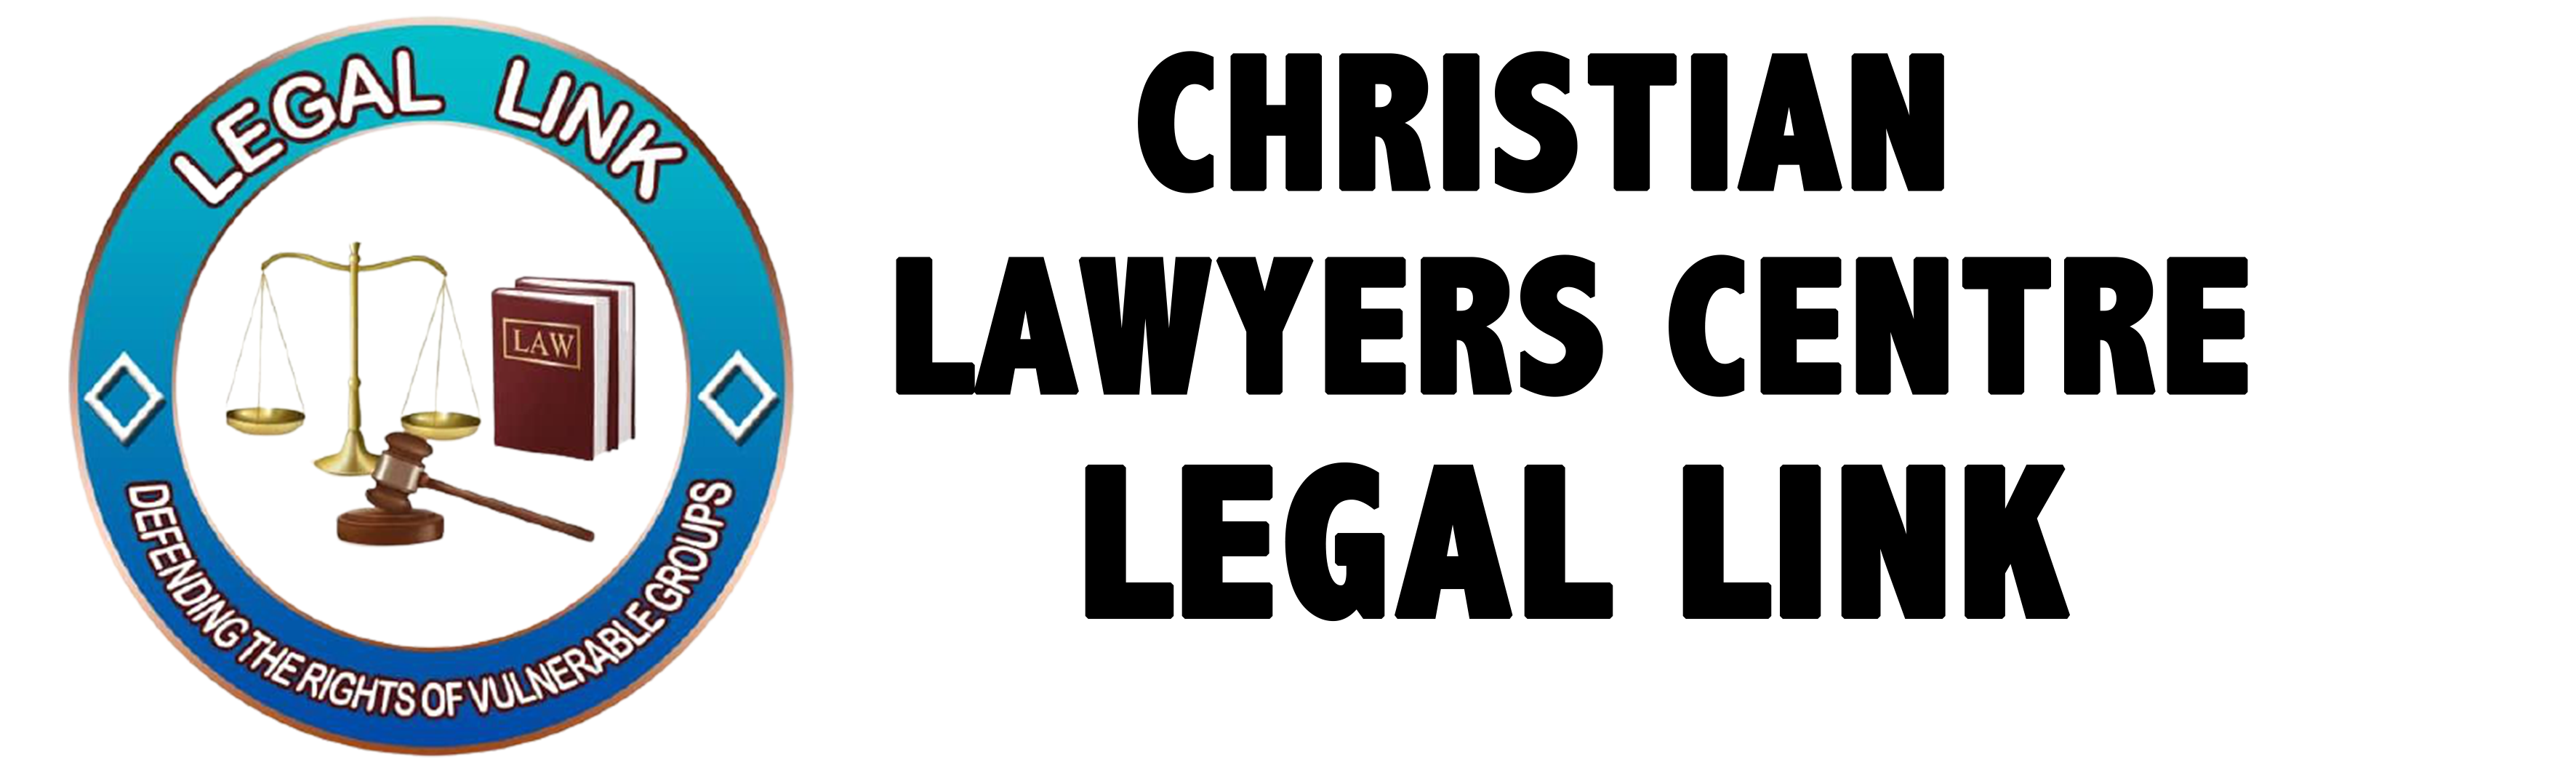 lega link logo